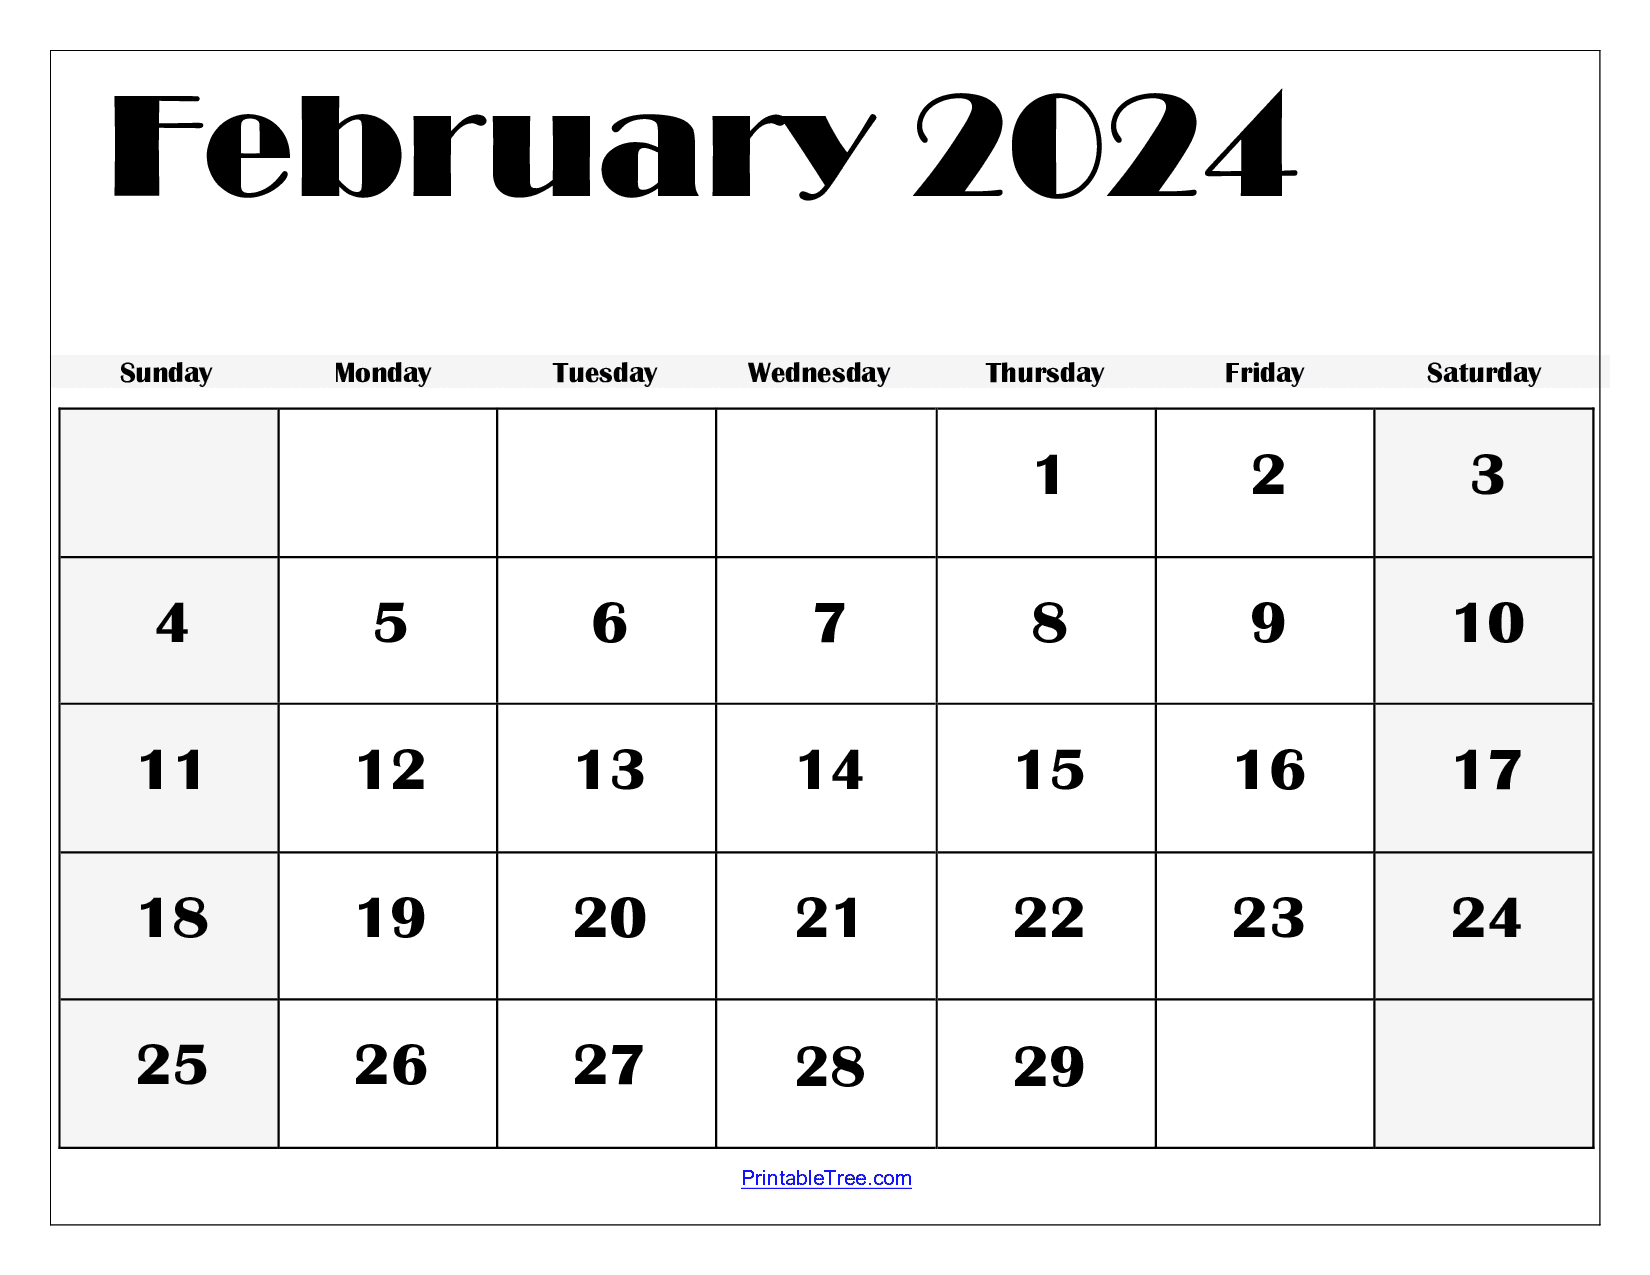 February 2024 Calendar Printable Pdf Template With Holidays for Calendar February 2024 Printable Free